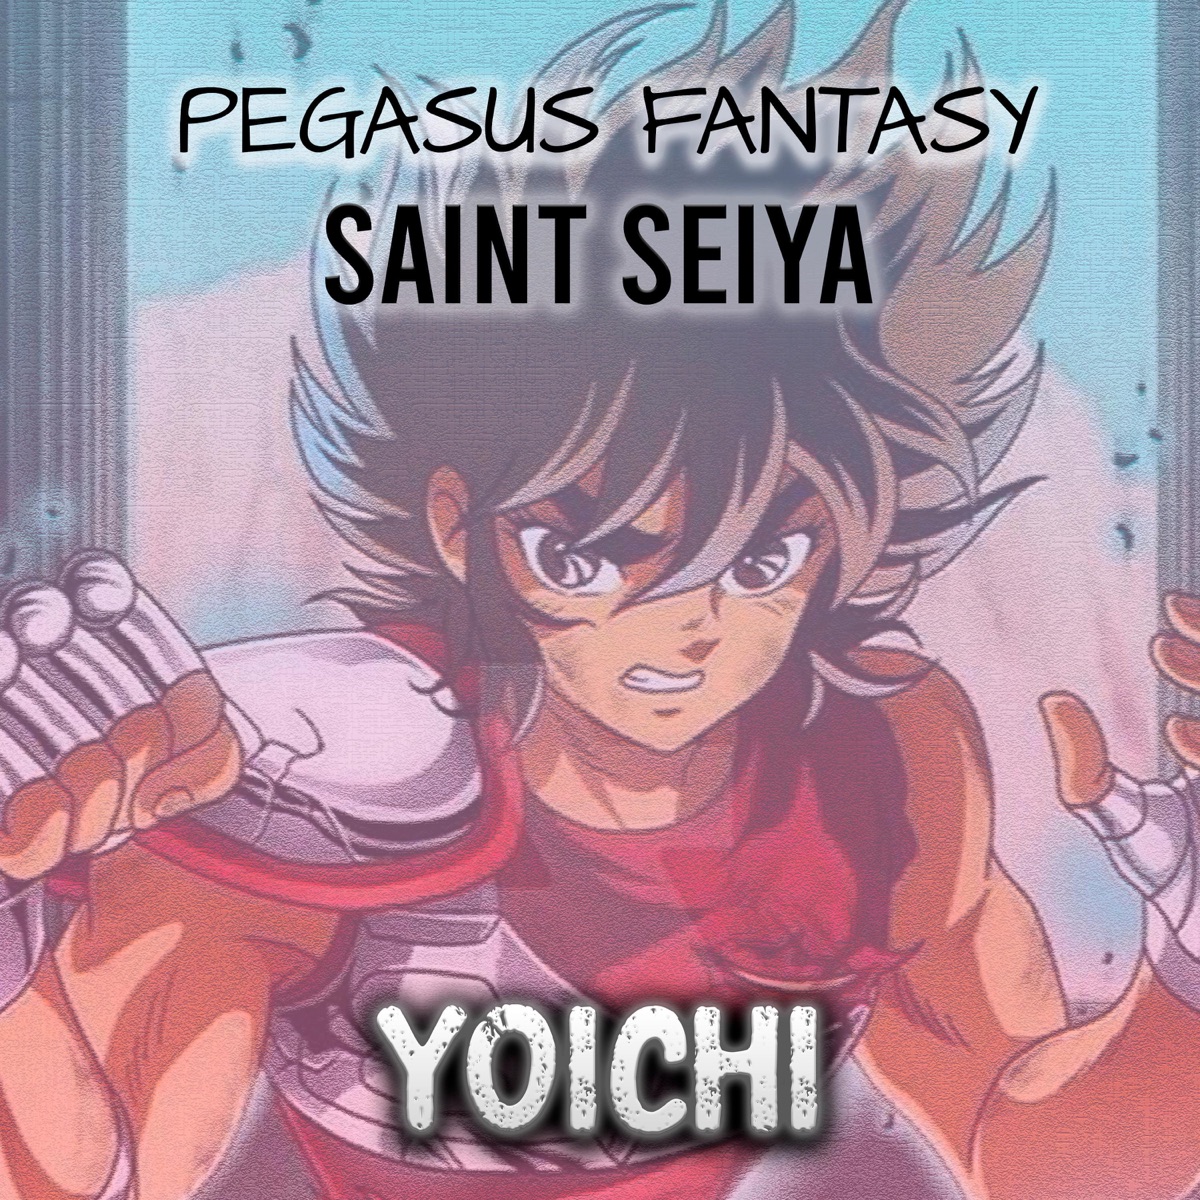 Yoichi Anime - Bon Voyage! (One Piece) (Opening 4) MP3 Download